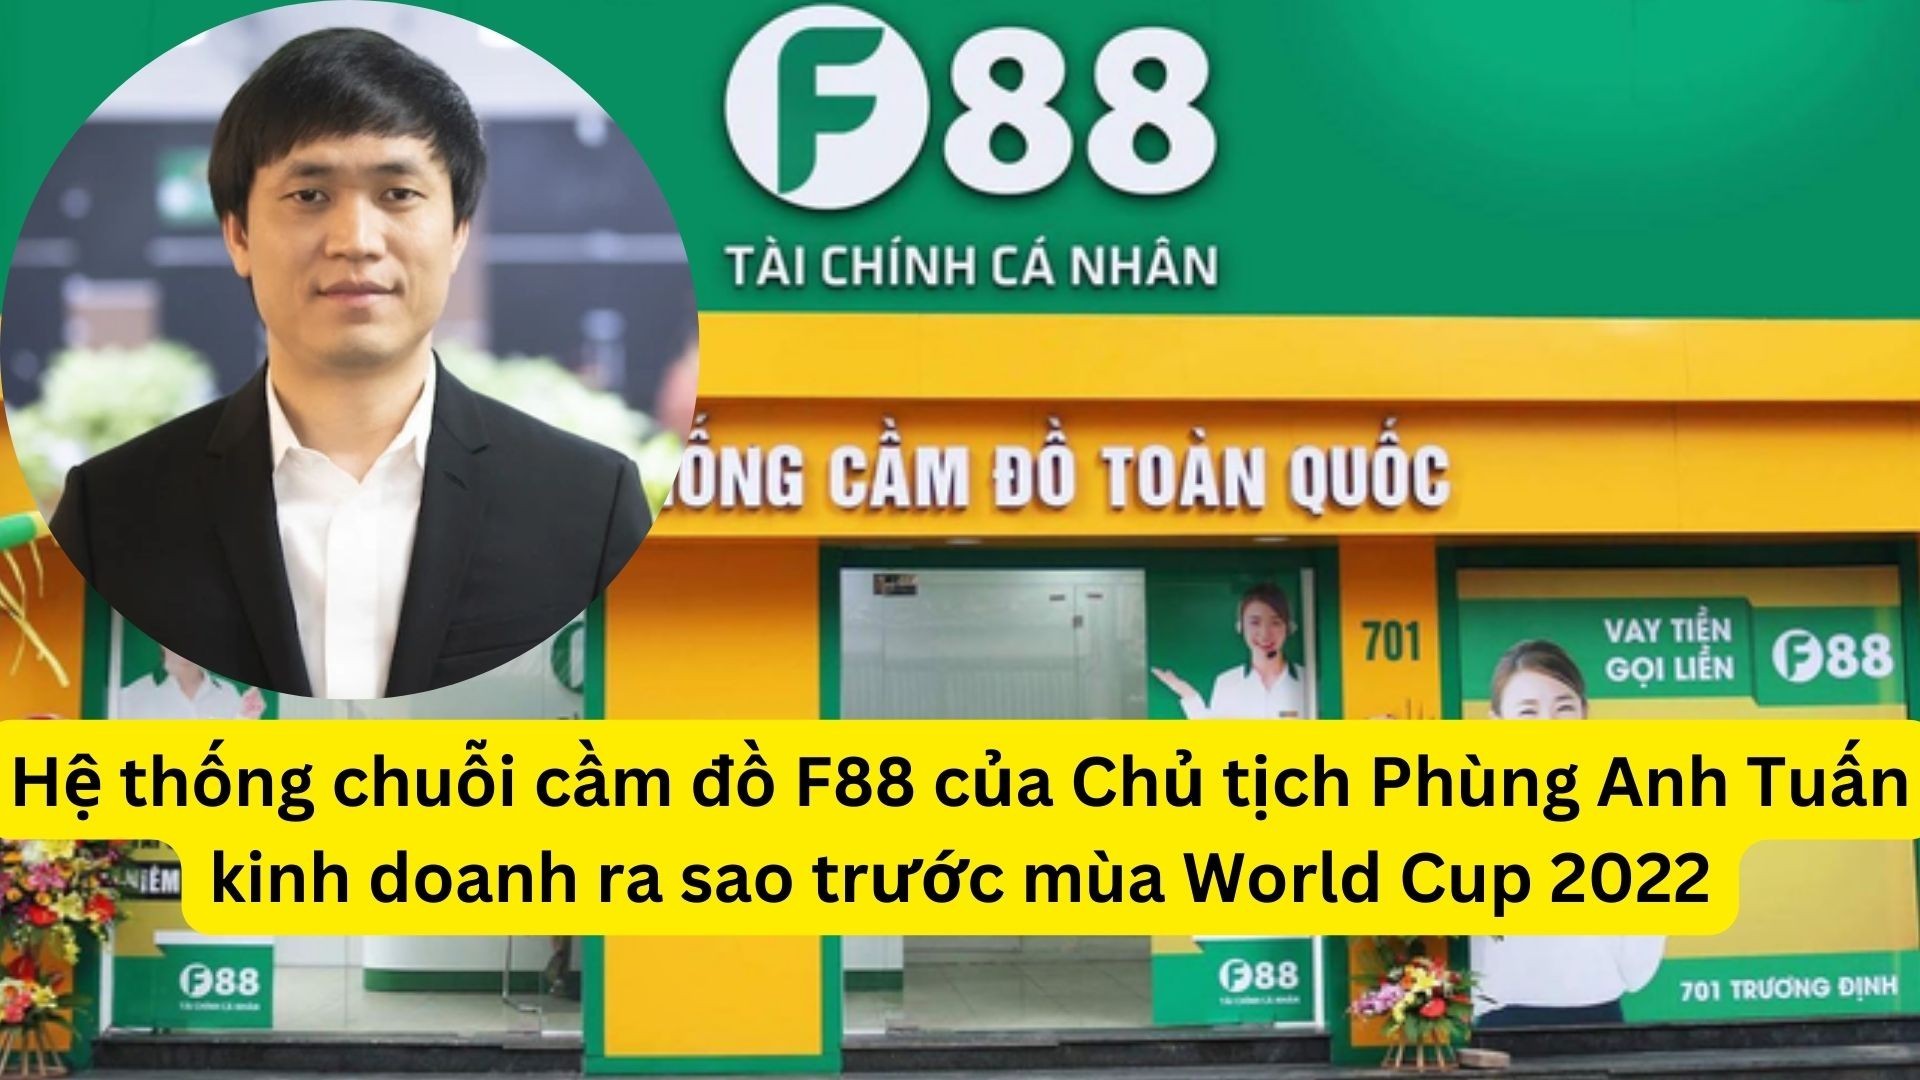 he-thong-chuoi-cam-do-f88-cua-chu-tich-phung-anh-tuan-kinh-doanh-ra-sao-truoc-mua-world-cup-2022-1-1669737395-1669865301.jpg